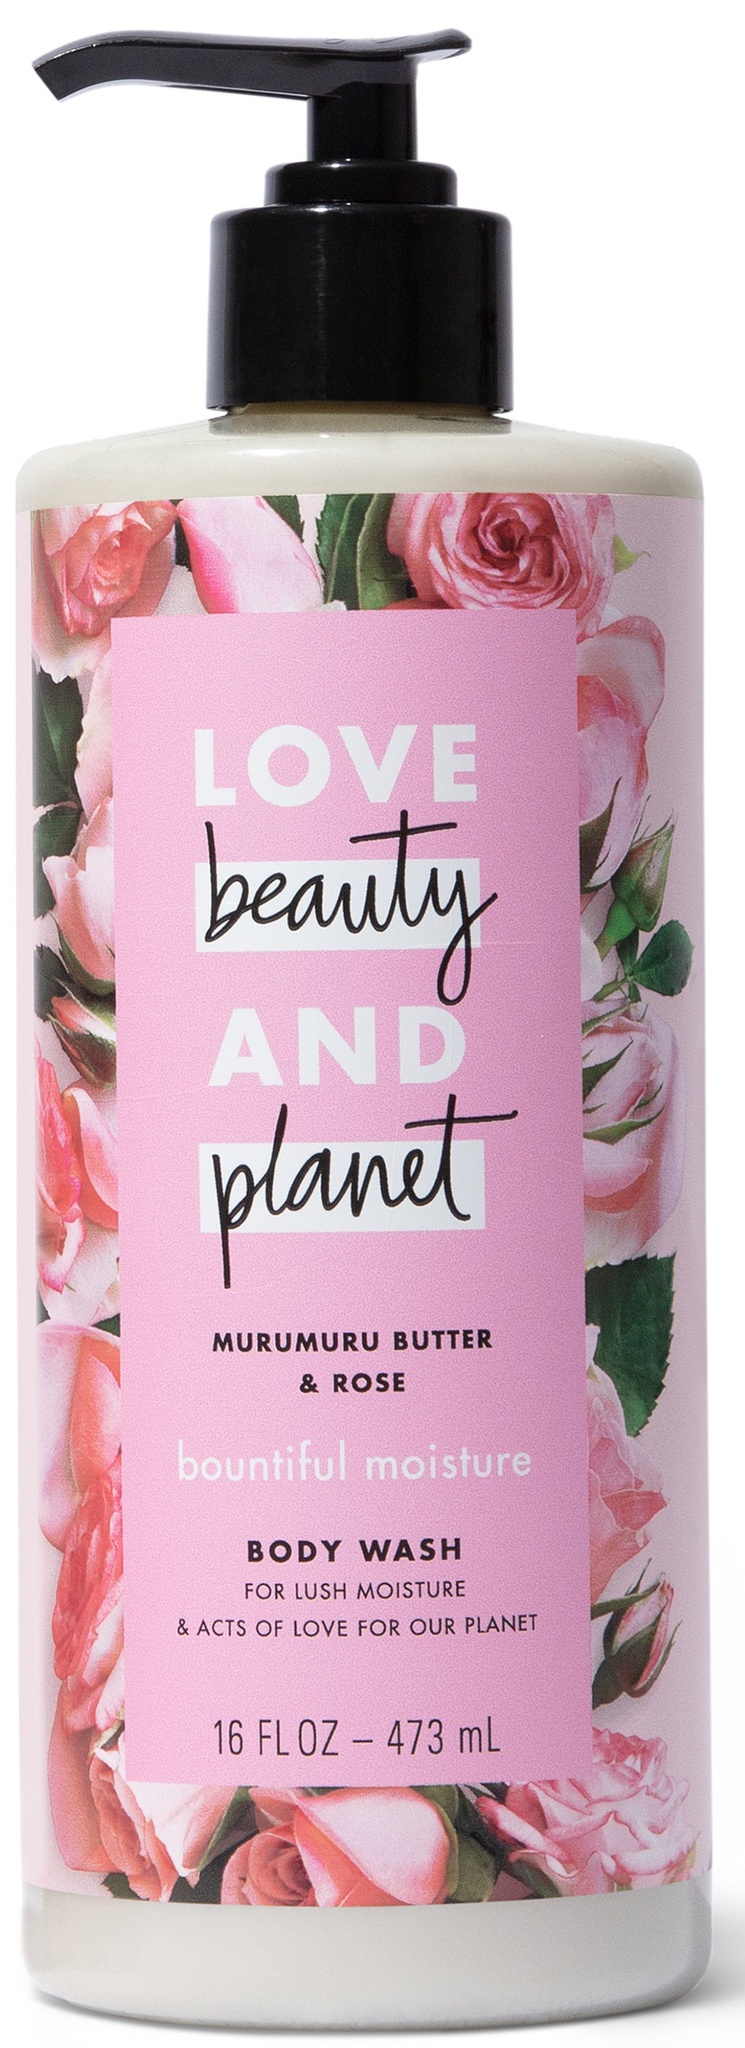 Love beauty and planet Love Beauty & Planet Natural Murumuru Butter & Rose Glow Body Wash